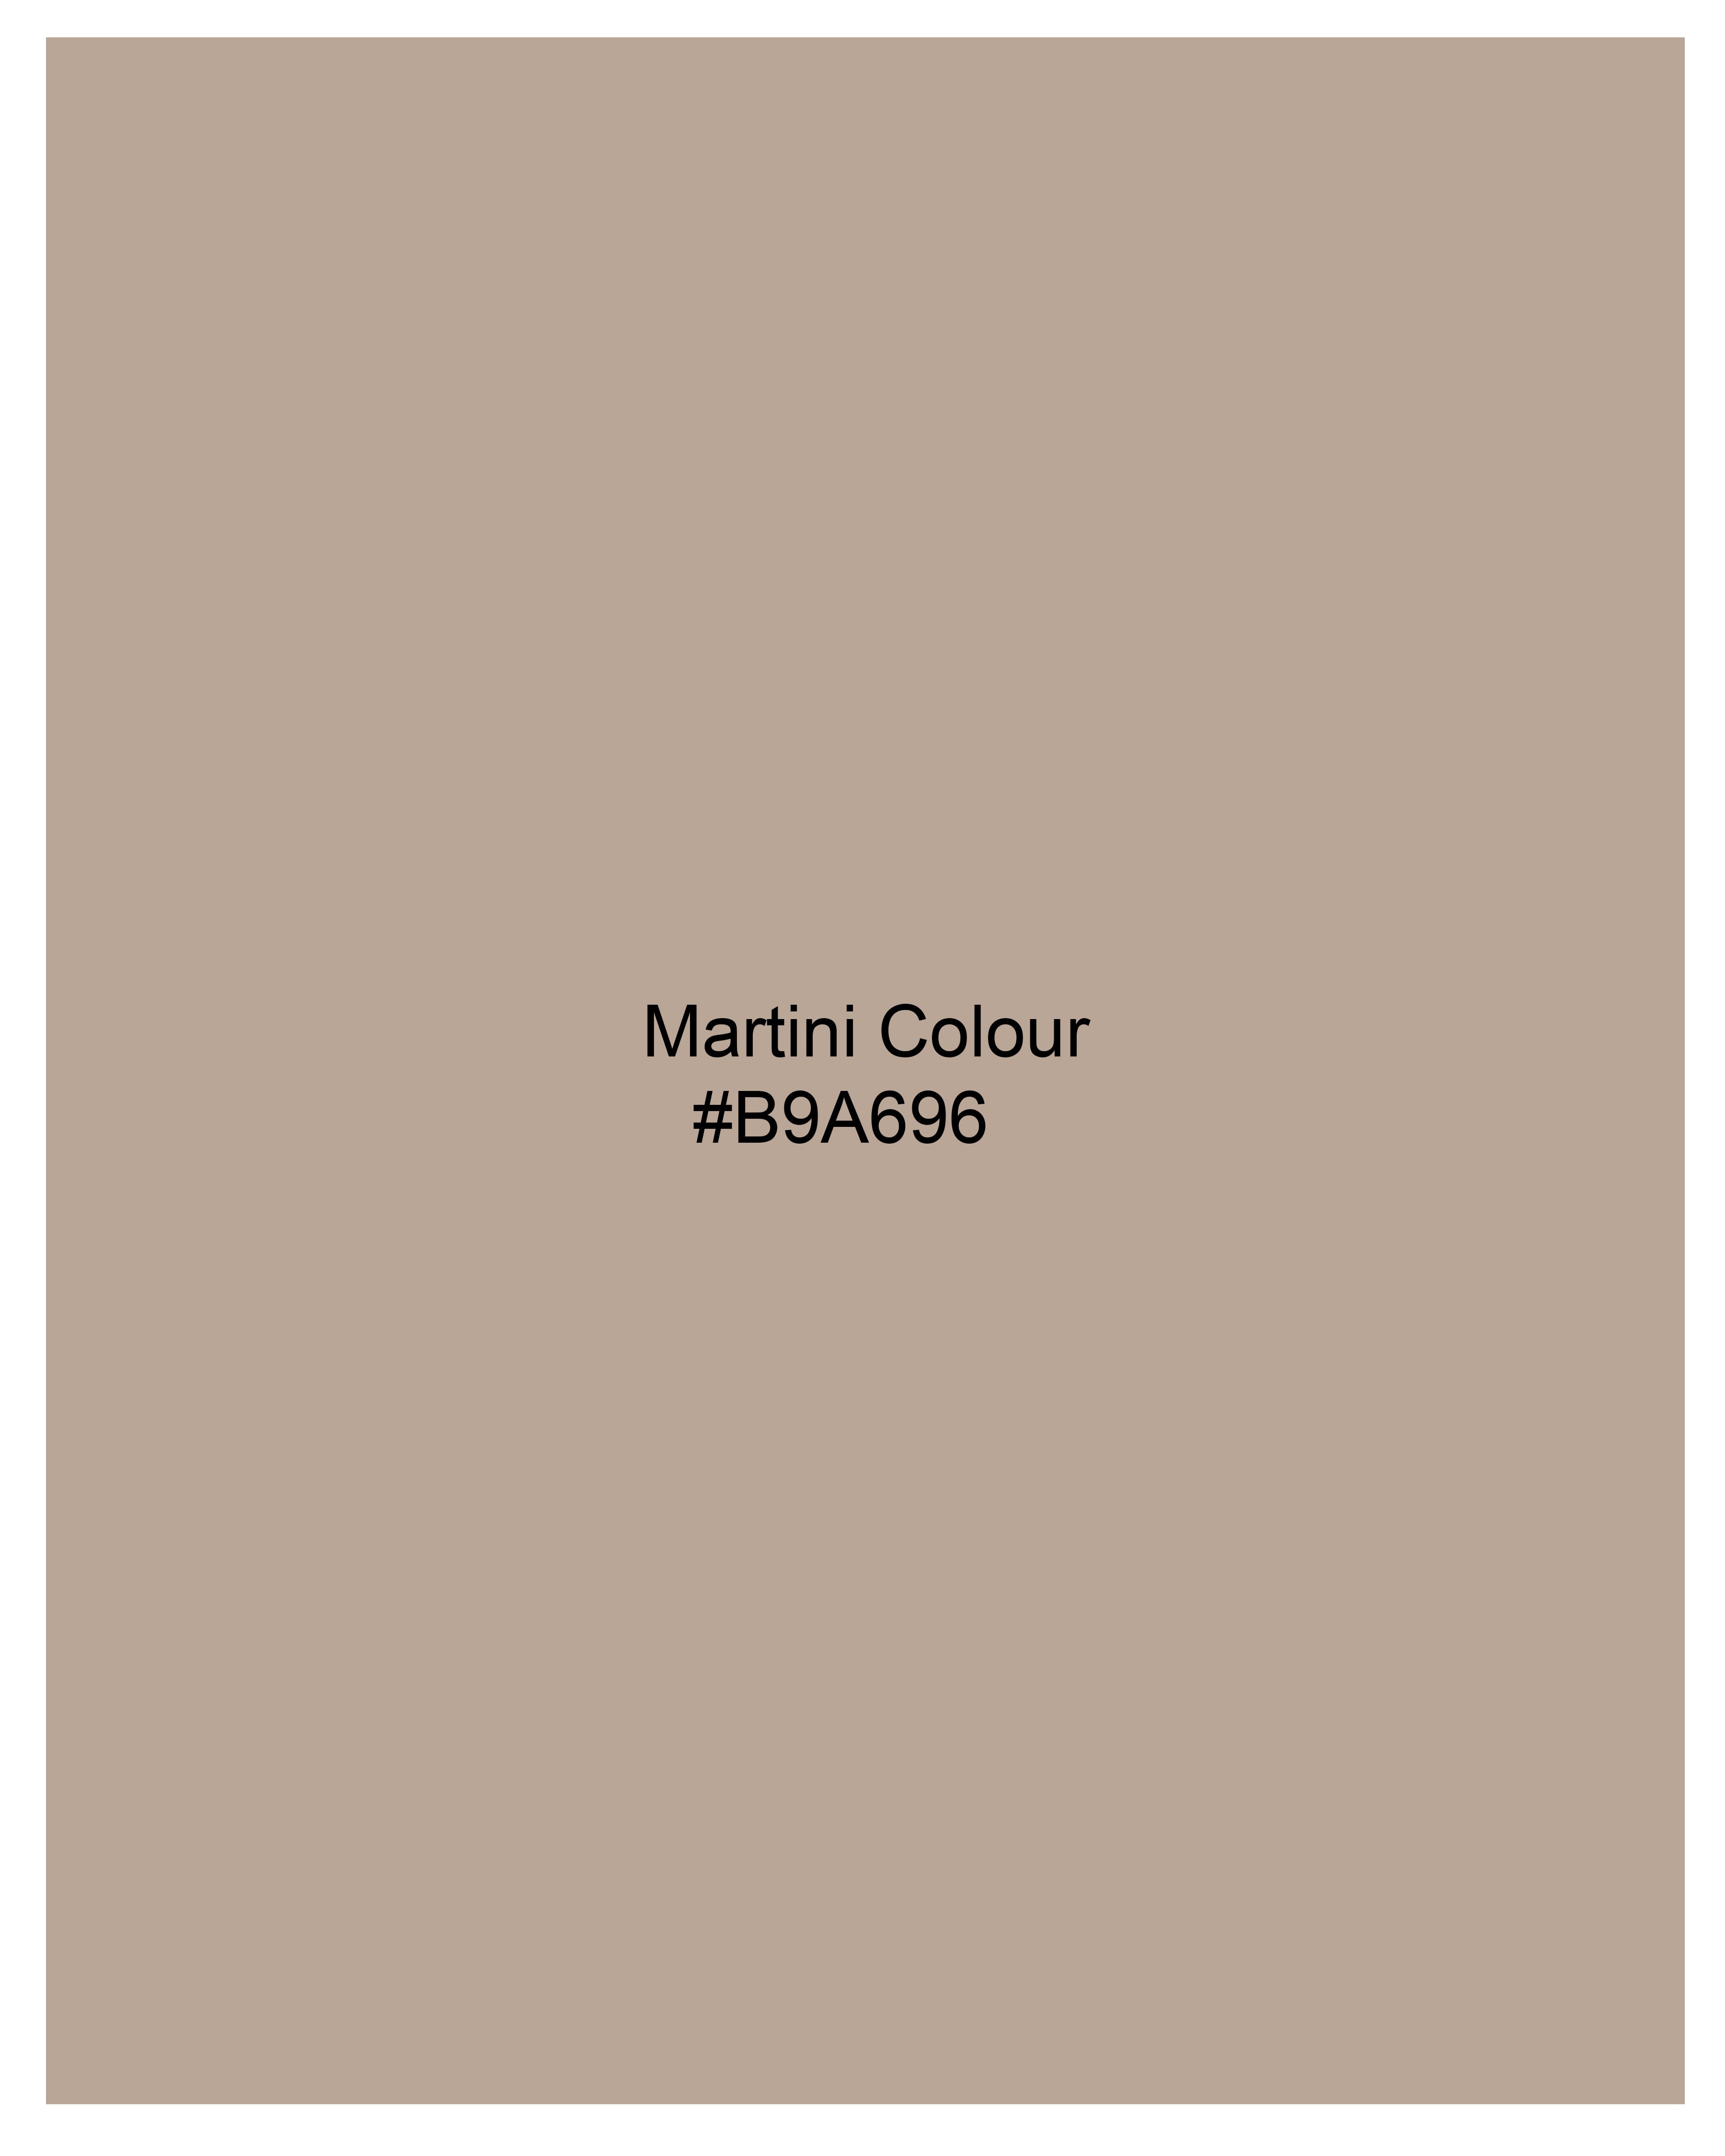 Martini Brown and Black Premium Cotton Pant T2375-28, T2375-30, T2375-32, T2375-34, T2375-36, T2375-38, T2375-40, T2375-42, T2375-44